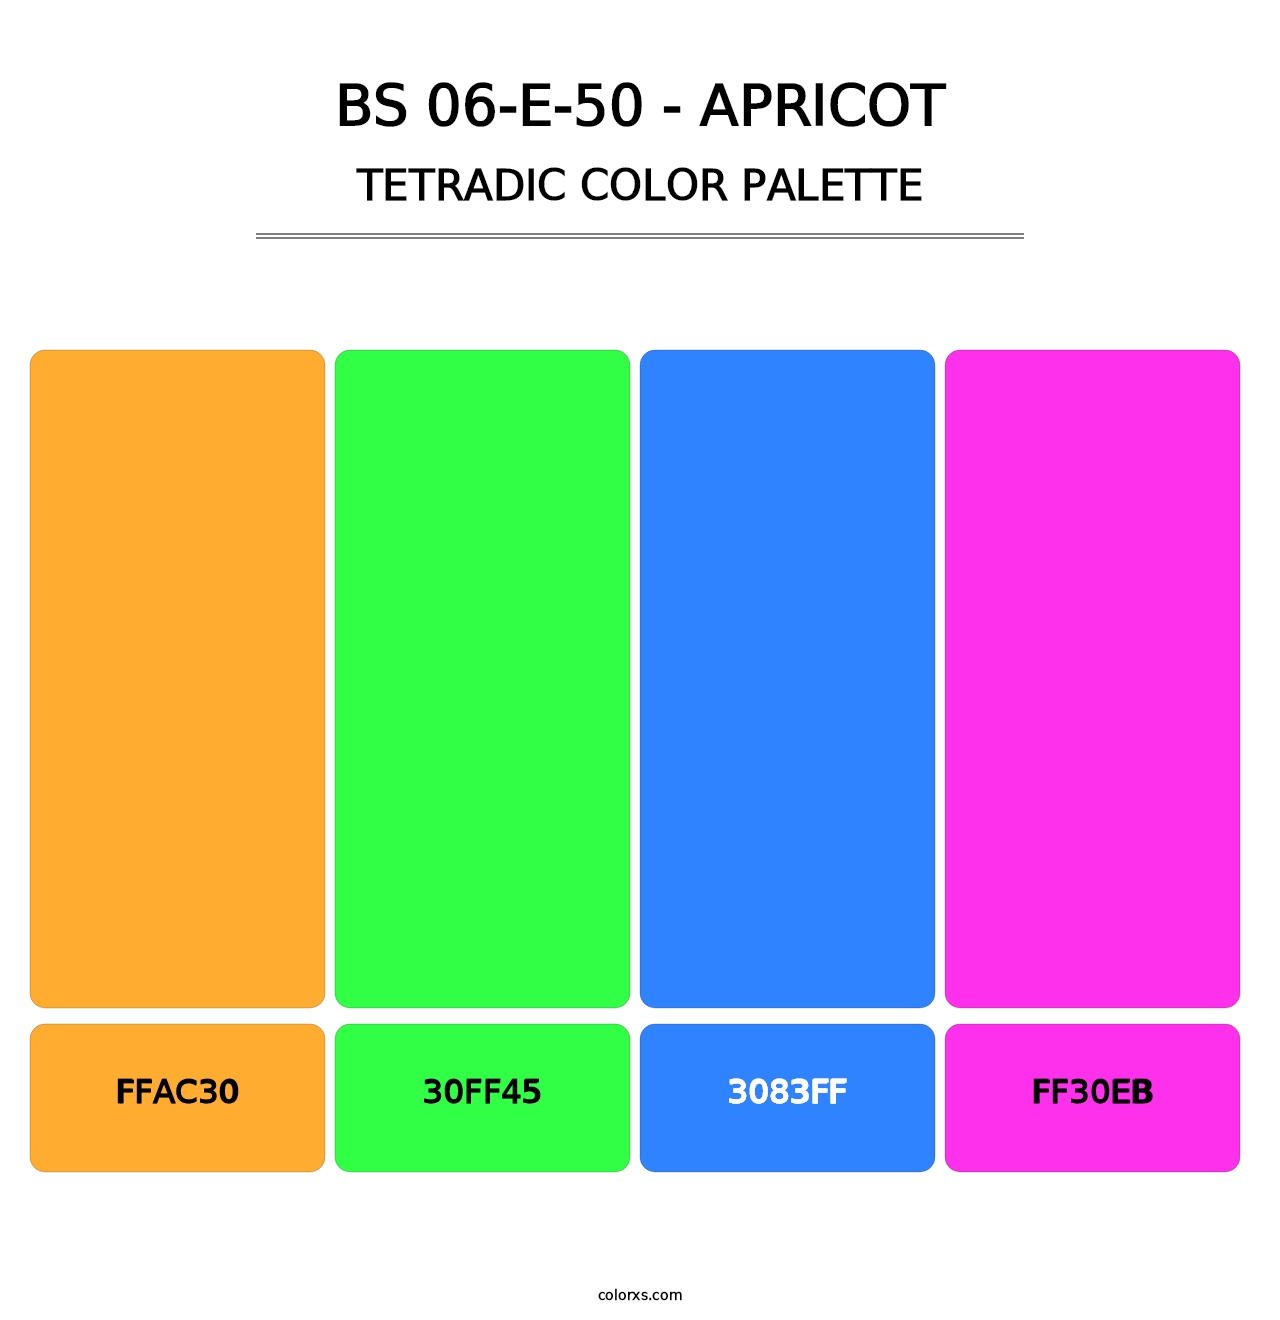 BS 06-E-50 - Apricot - Tetradic Color Palette